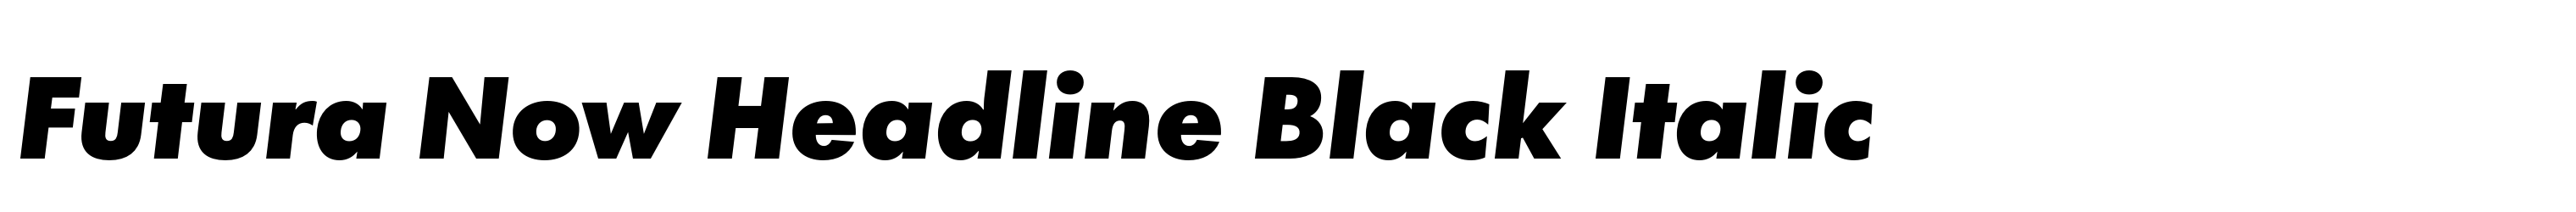 Futura Now Headline Black Italic